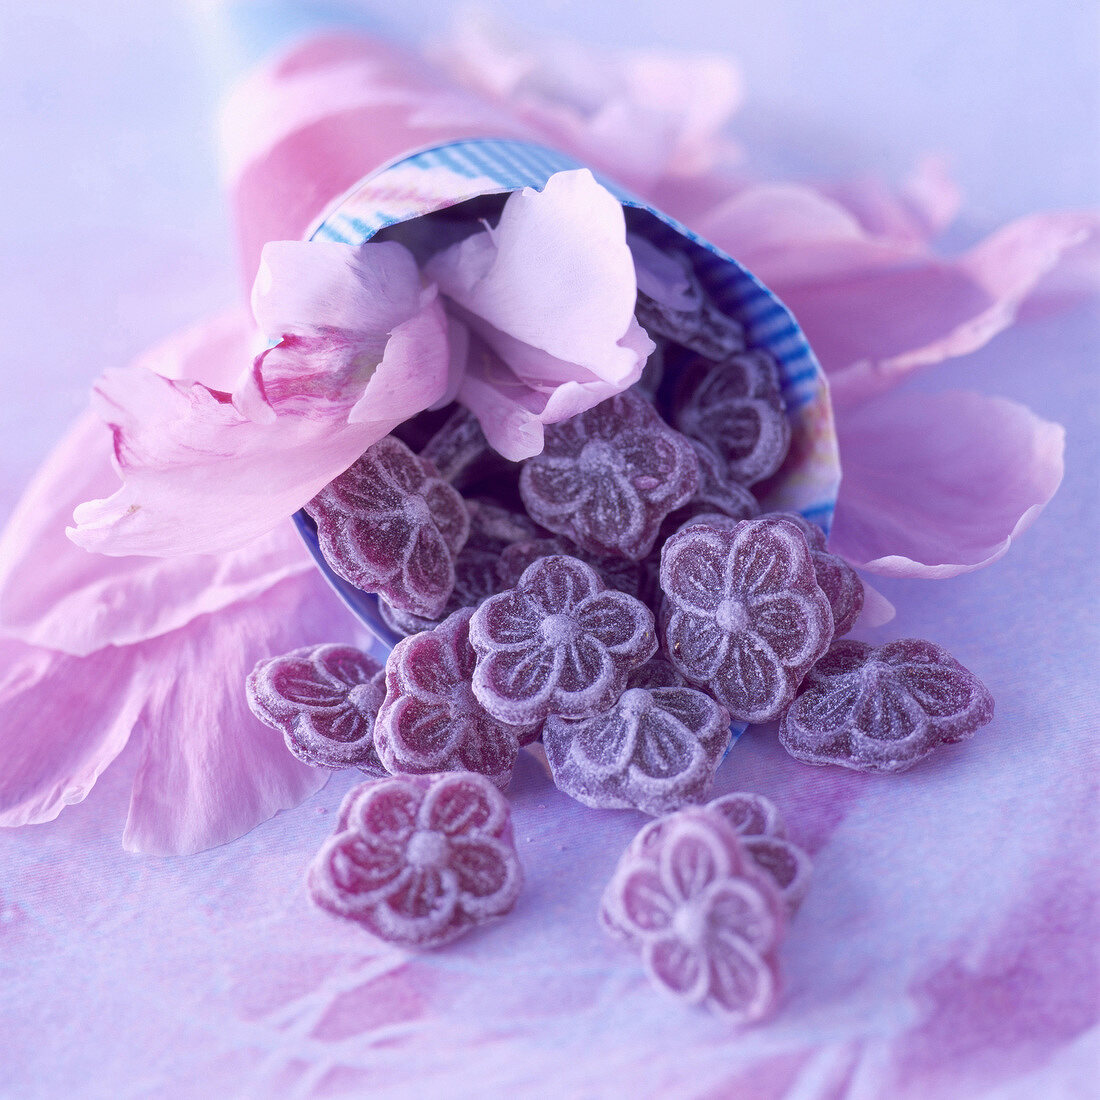 violet candies